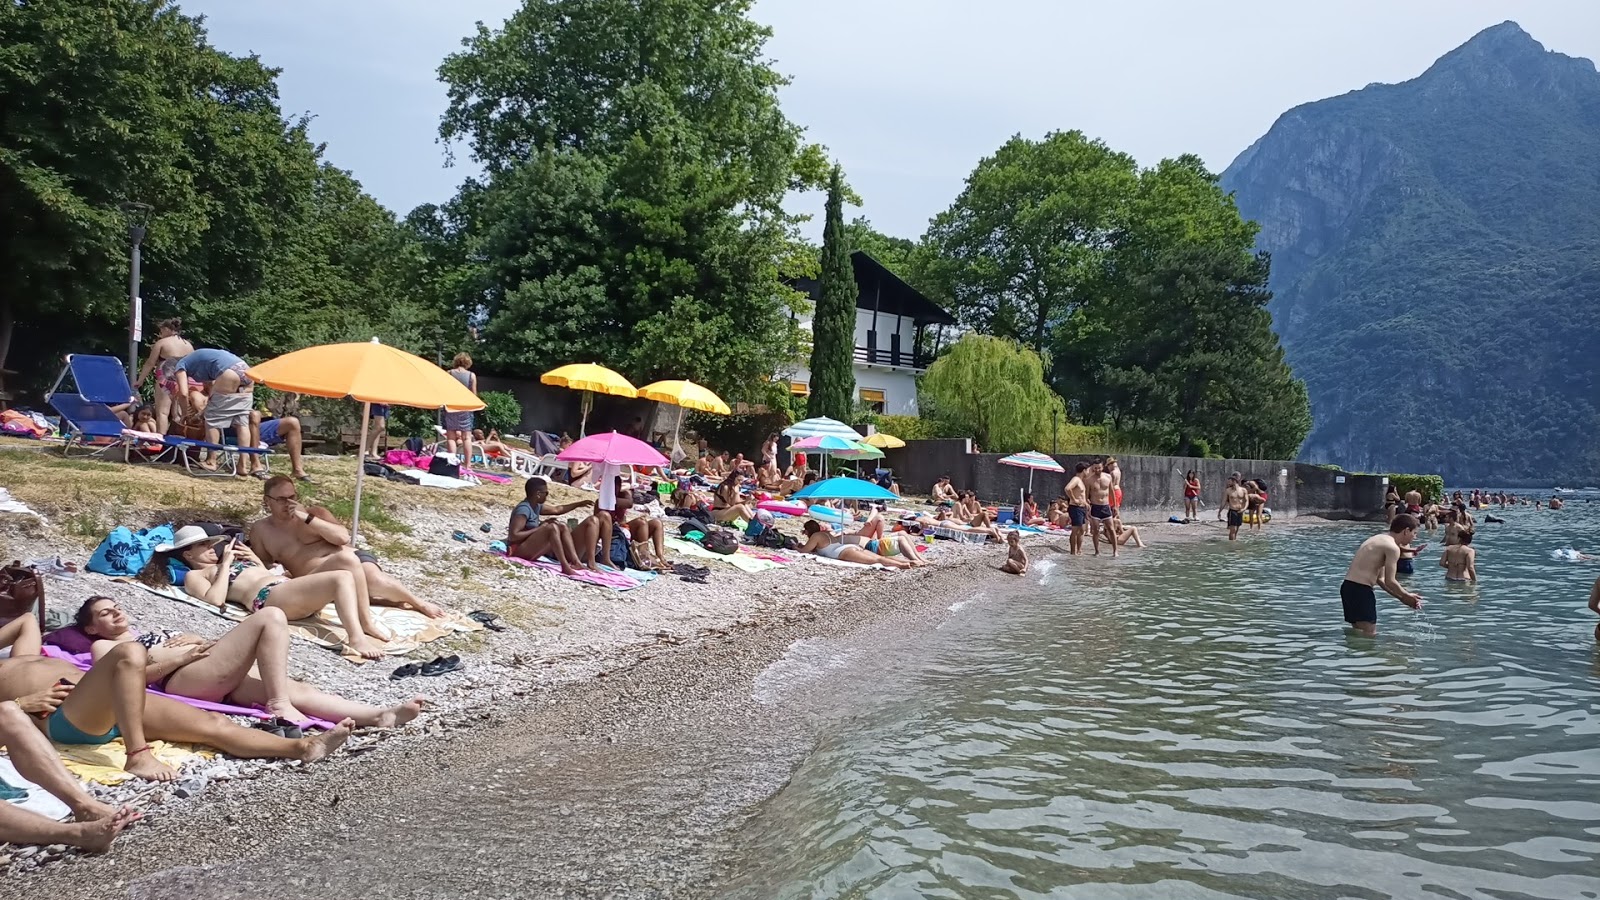 Foto de Spiaggia Camping Abbadia Lariana - lugar popular entre os apreciadores de relaxamento